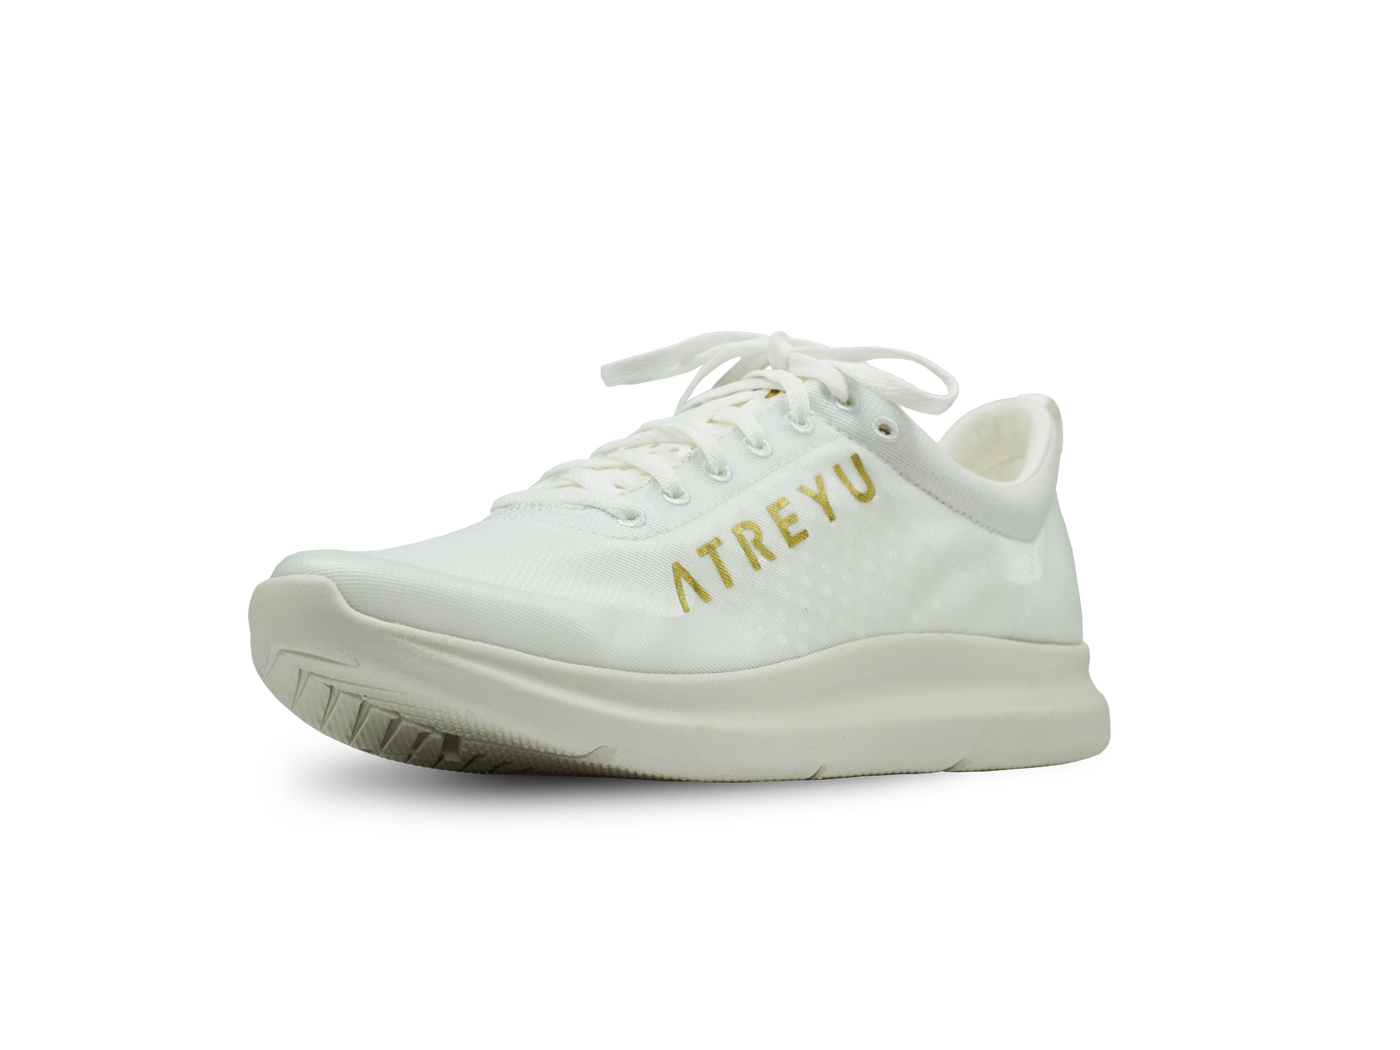 Atreyu Base Model - Lightweight running shoes angle white